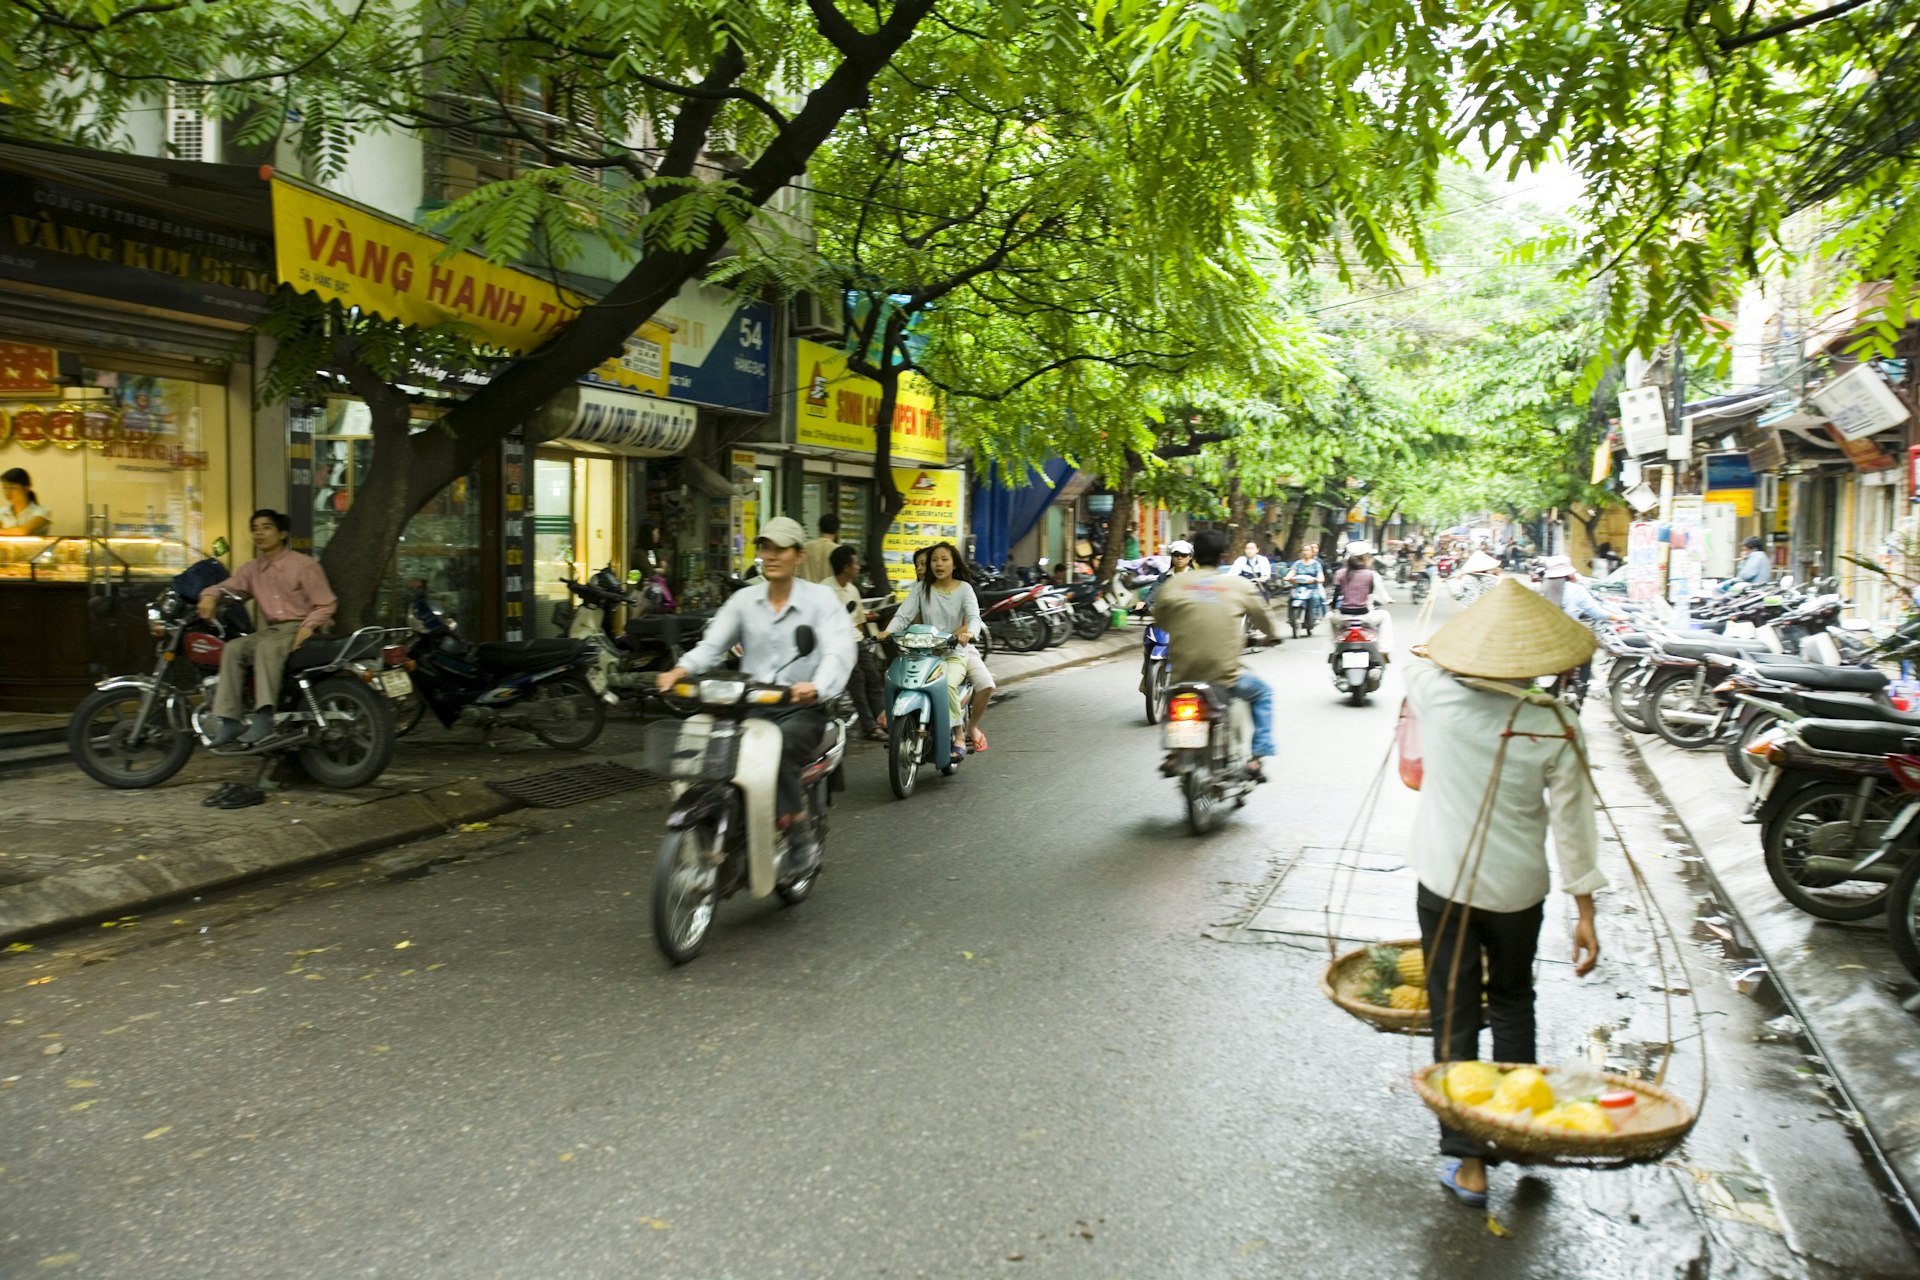 Motorcycles in Han Bac street scene, Old Quarter of Hanoi